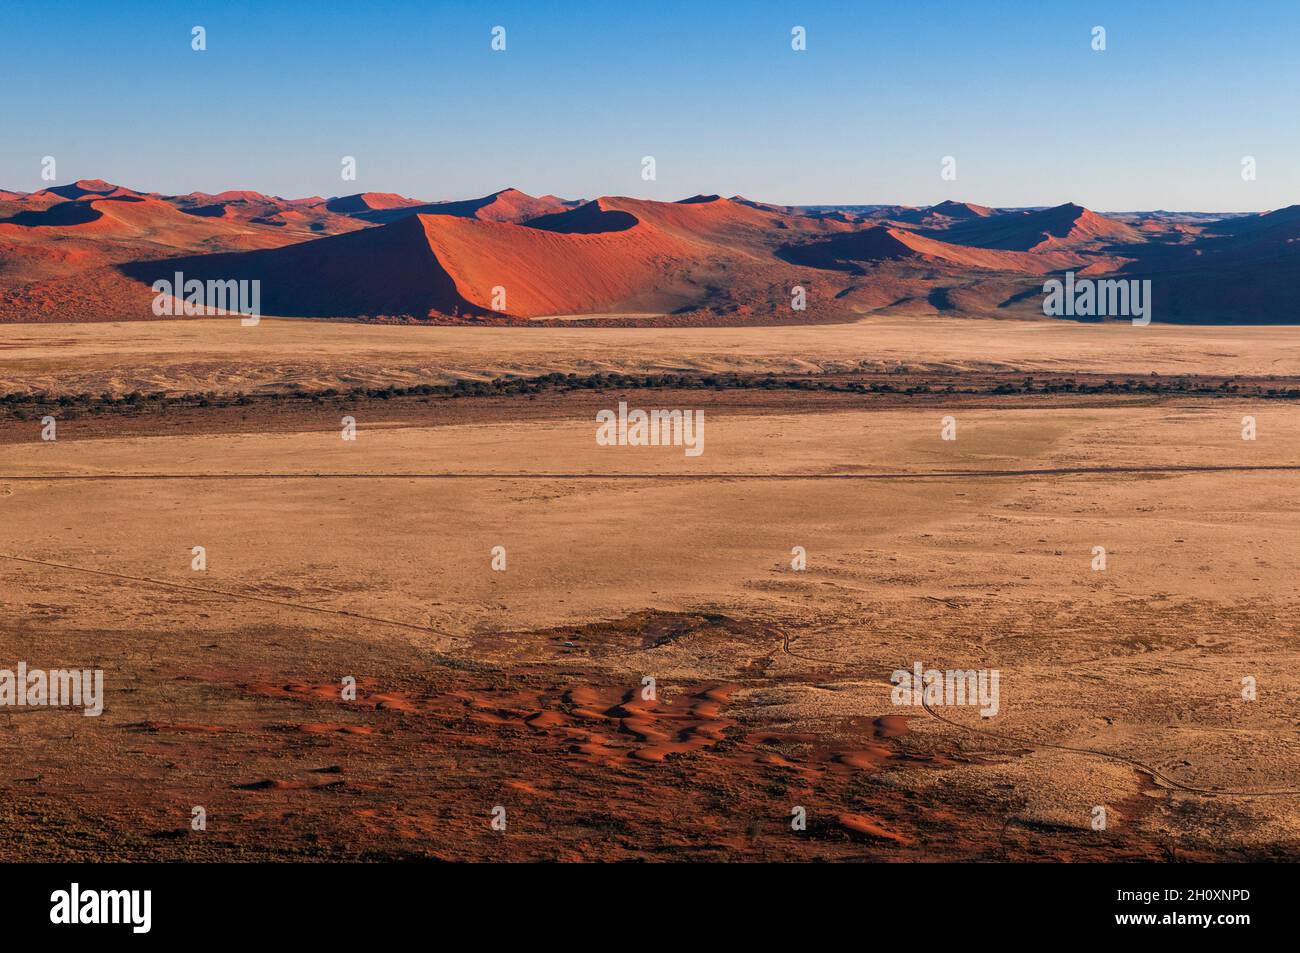 An aerial view of red sand dunes in the Namib desert. Namib Naukluft Park, Namib Desert, Namibia. Stock Photo